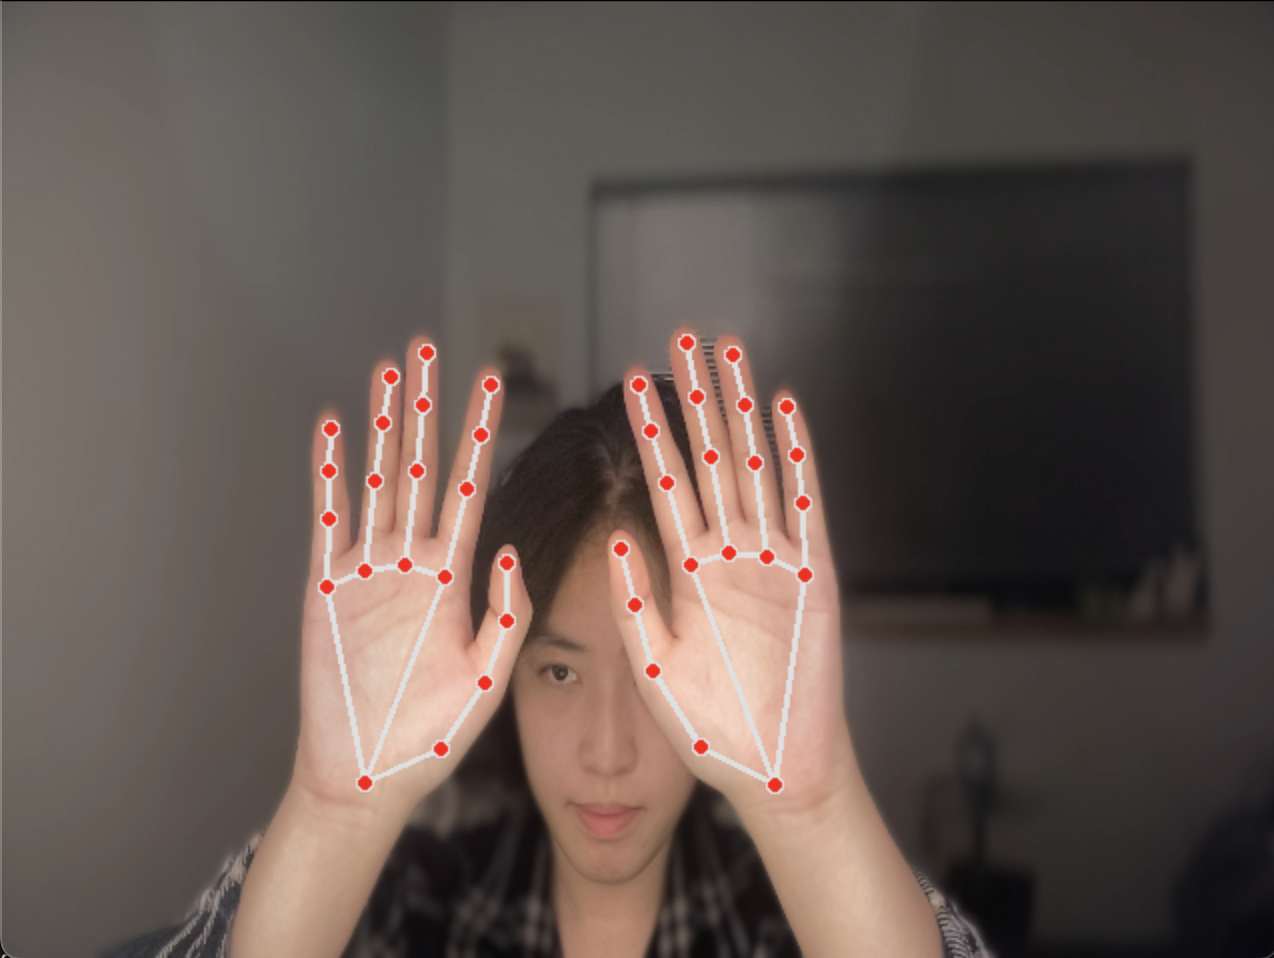 2 hands detection